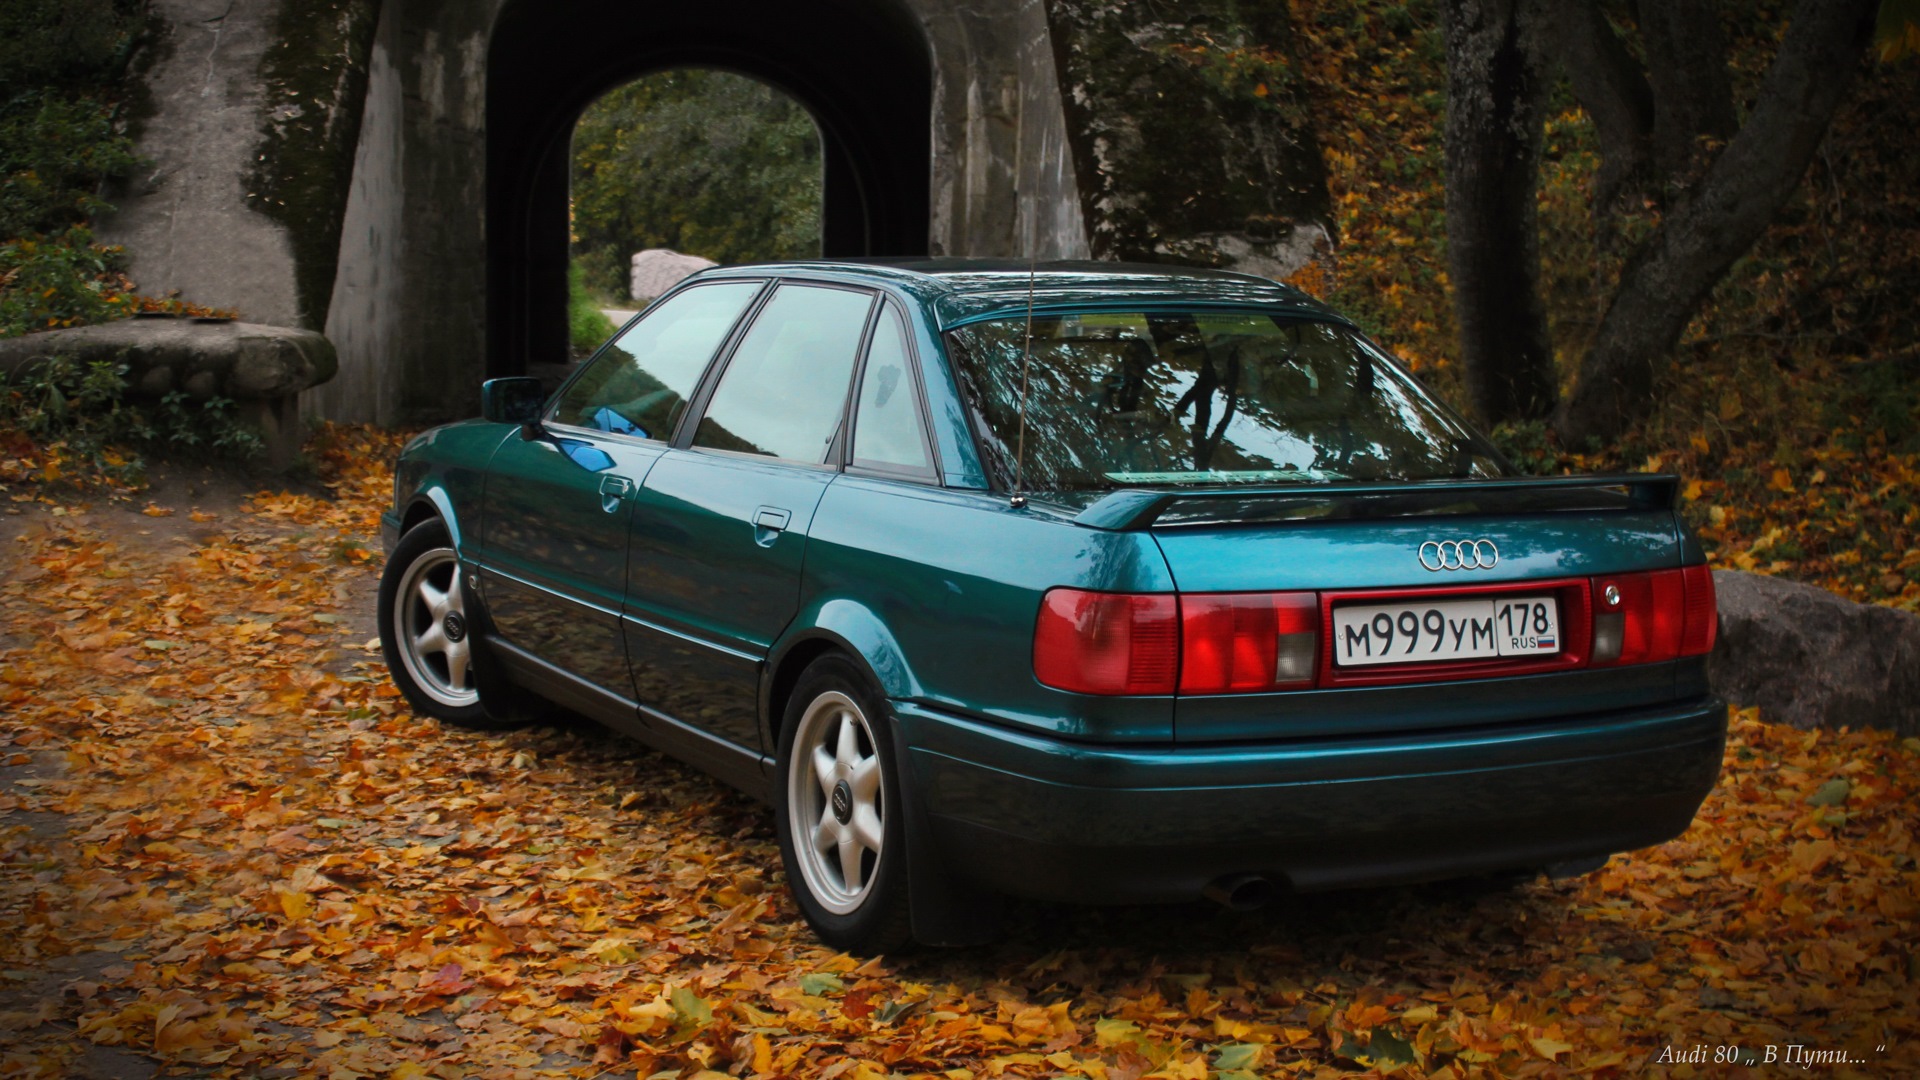 Audi 80 b4 s2. Ауди 80 б4. Ауди 80 б4 зеленая. Ауди 80 в 4 кузове. Купить ауди 80 б4 в беларуси